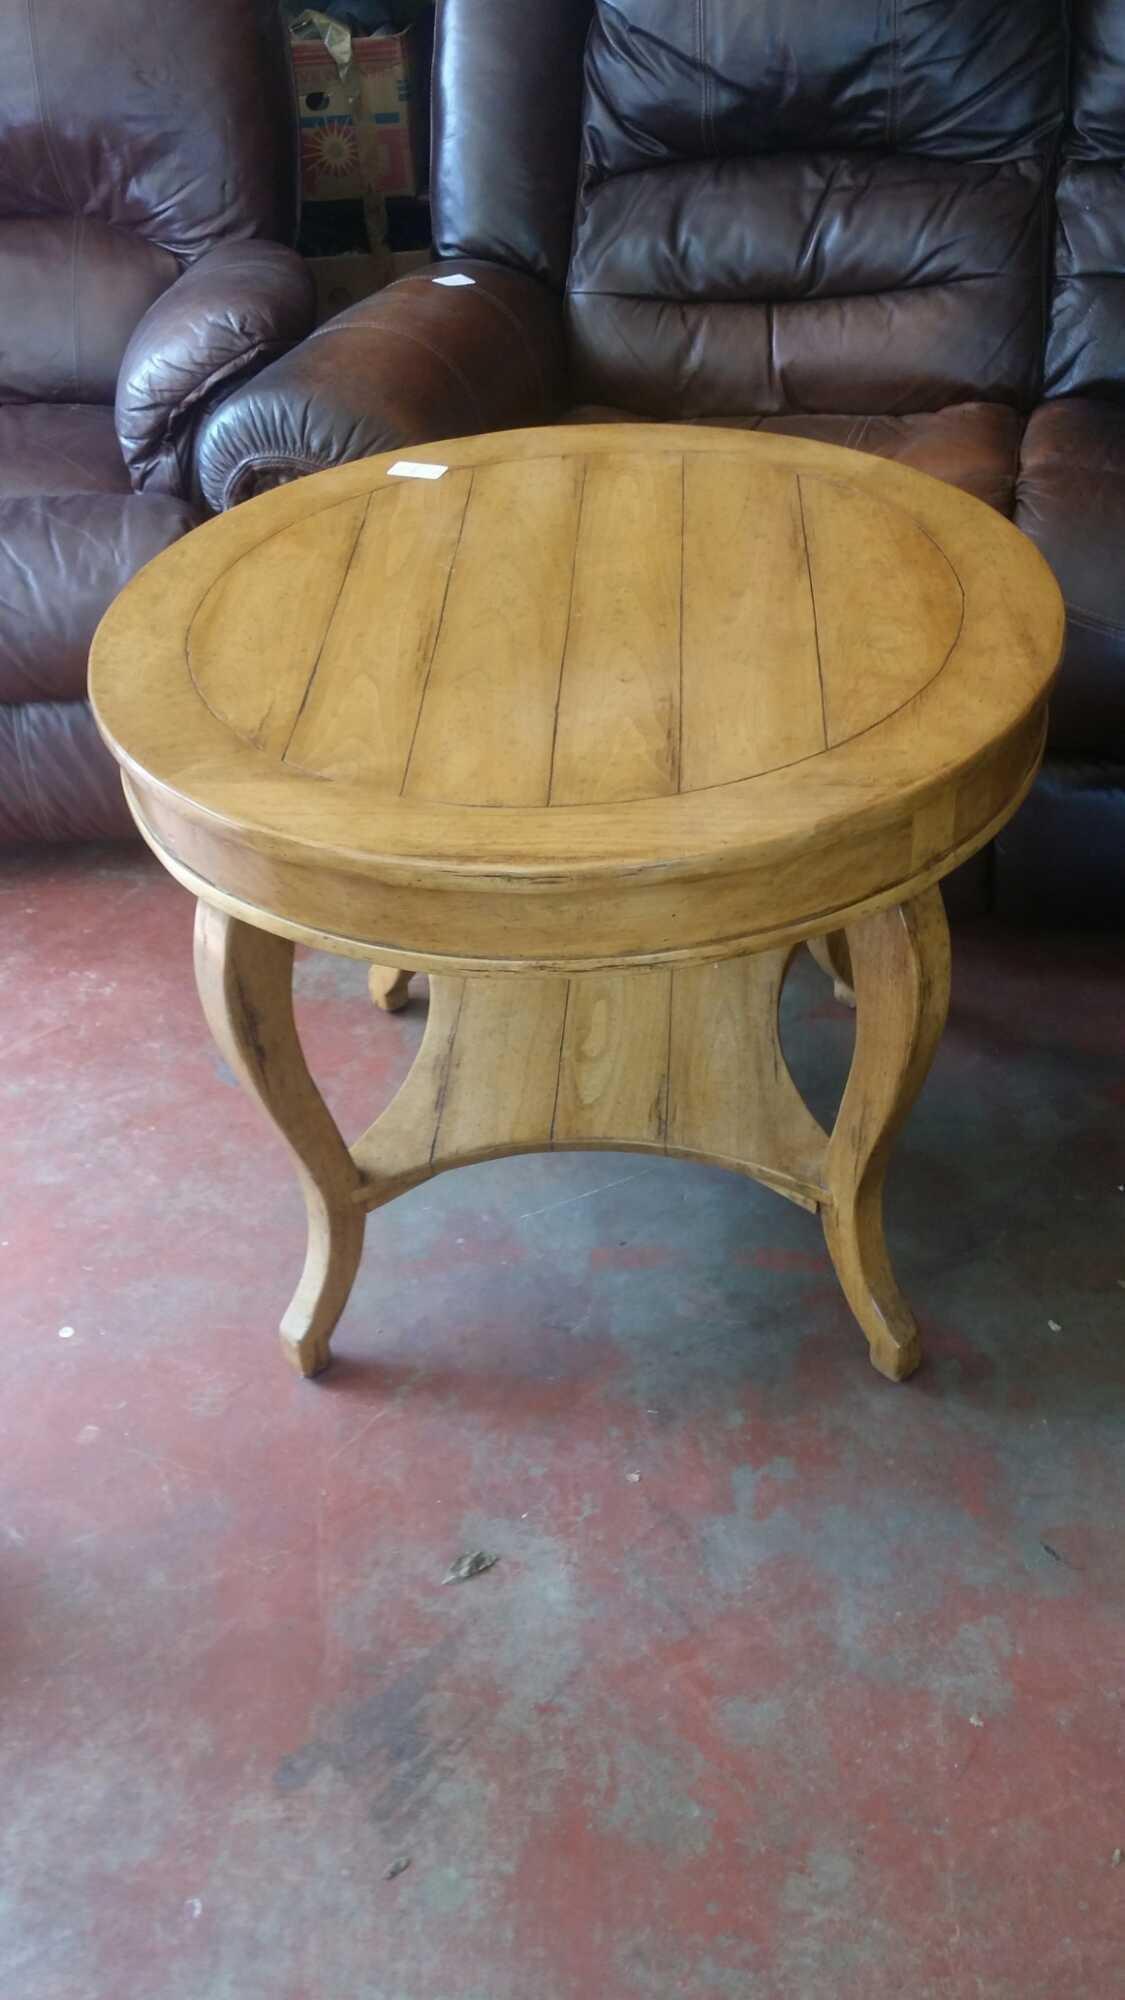 Alderney Craftmens Wooden Table 37" Round